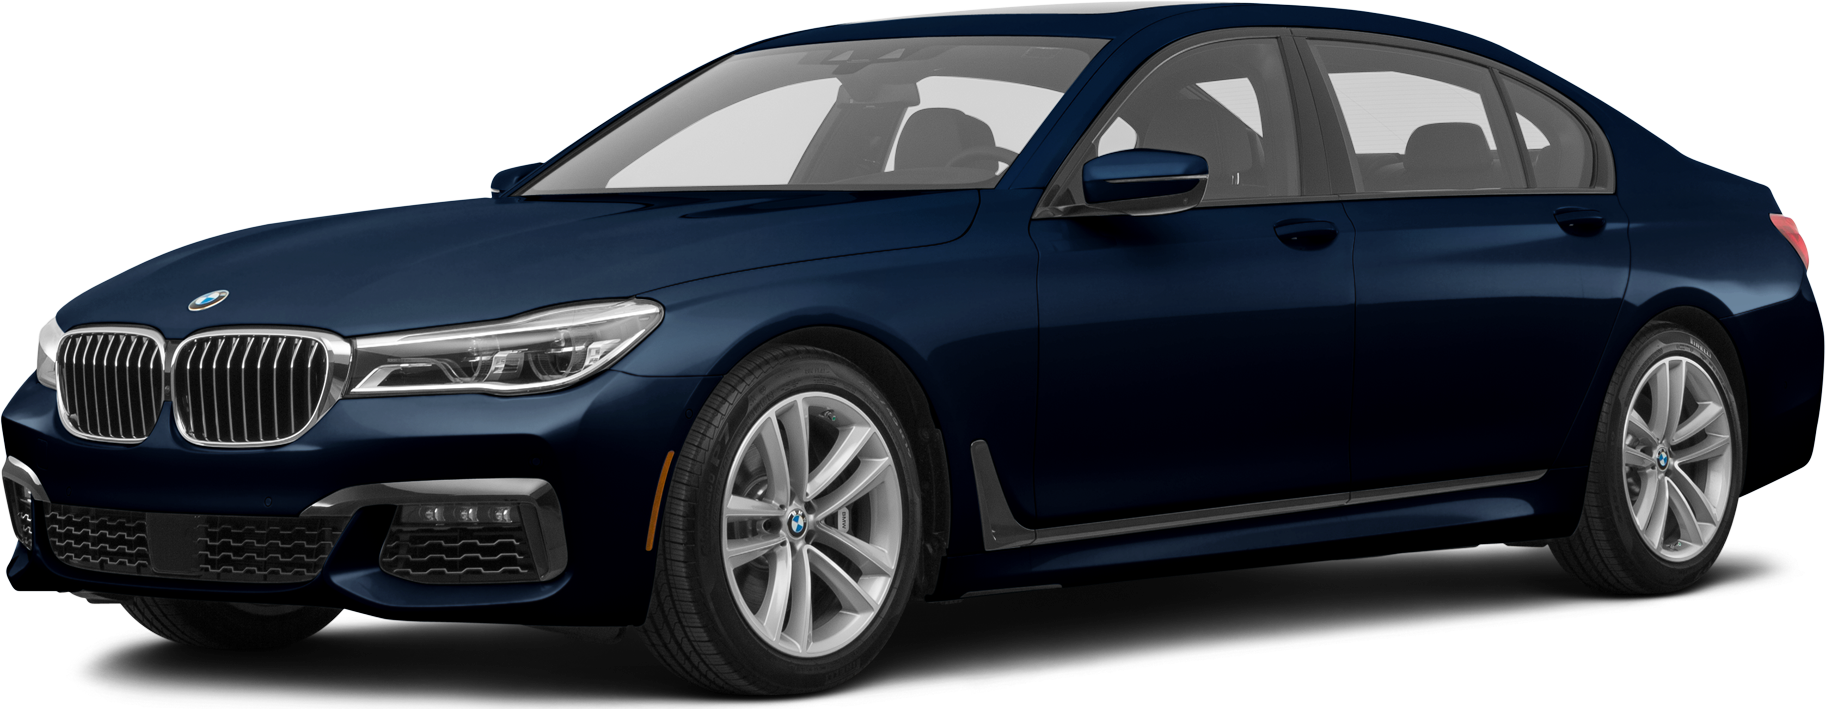 2017 BMW 7 Series Price, Value, Ratings & Reviews